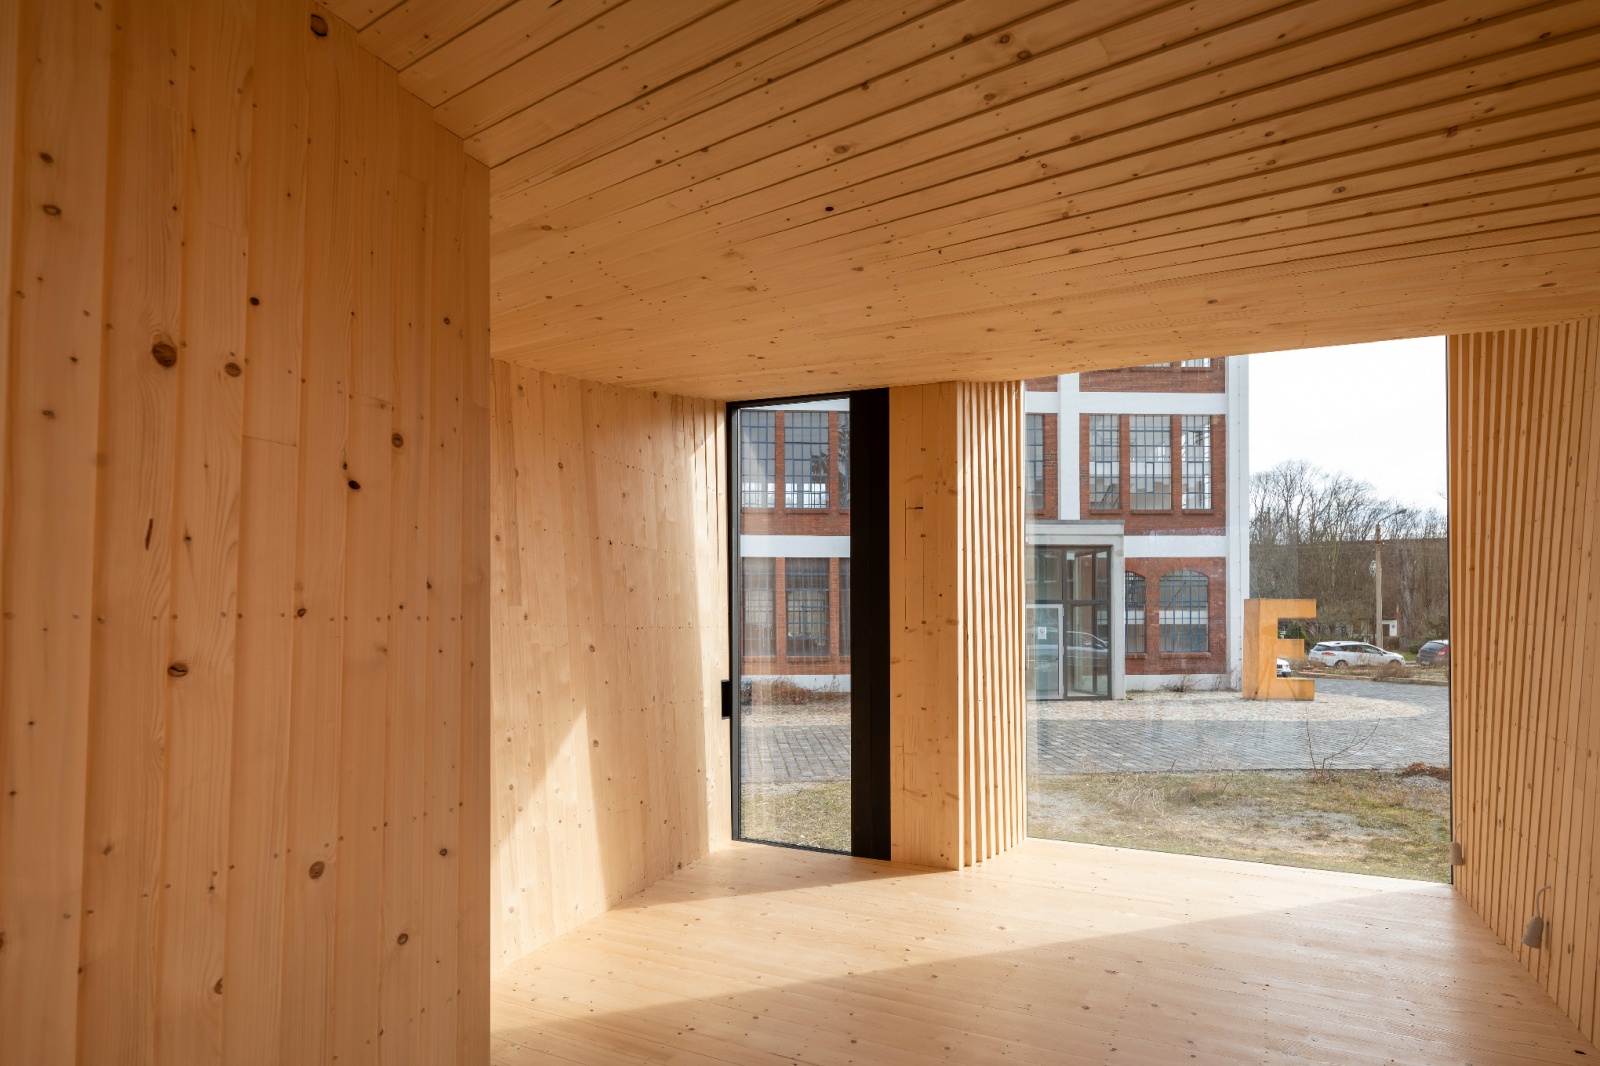 Timber Prototype House, Blick in den Innenraum, Bild: Thomas Müller, Weimar